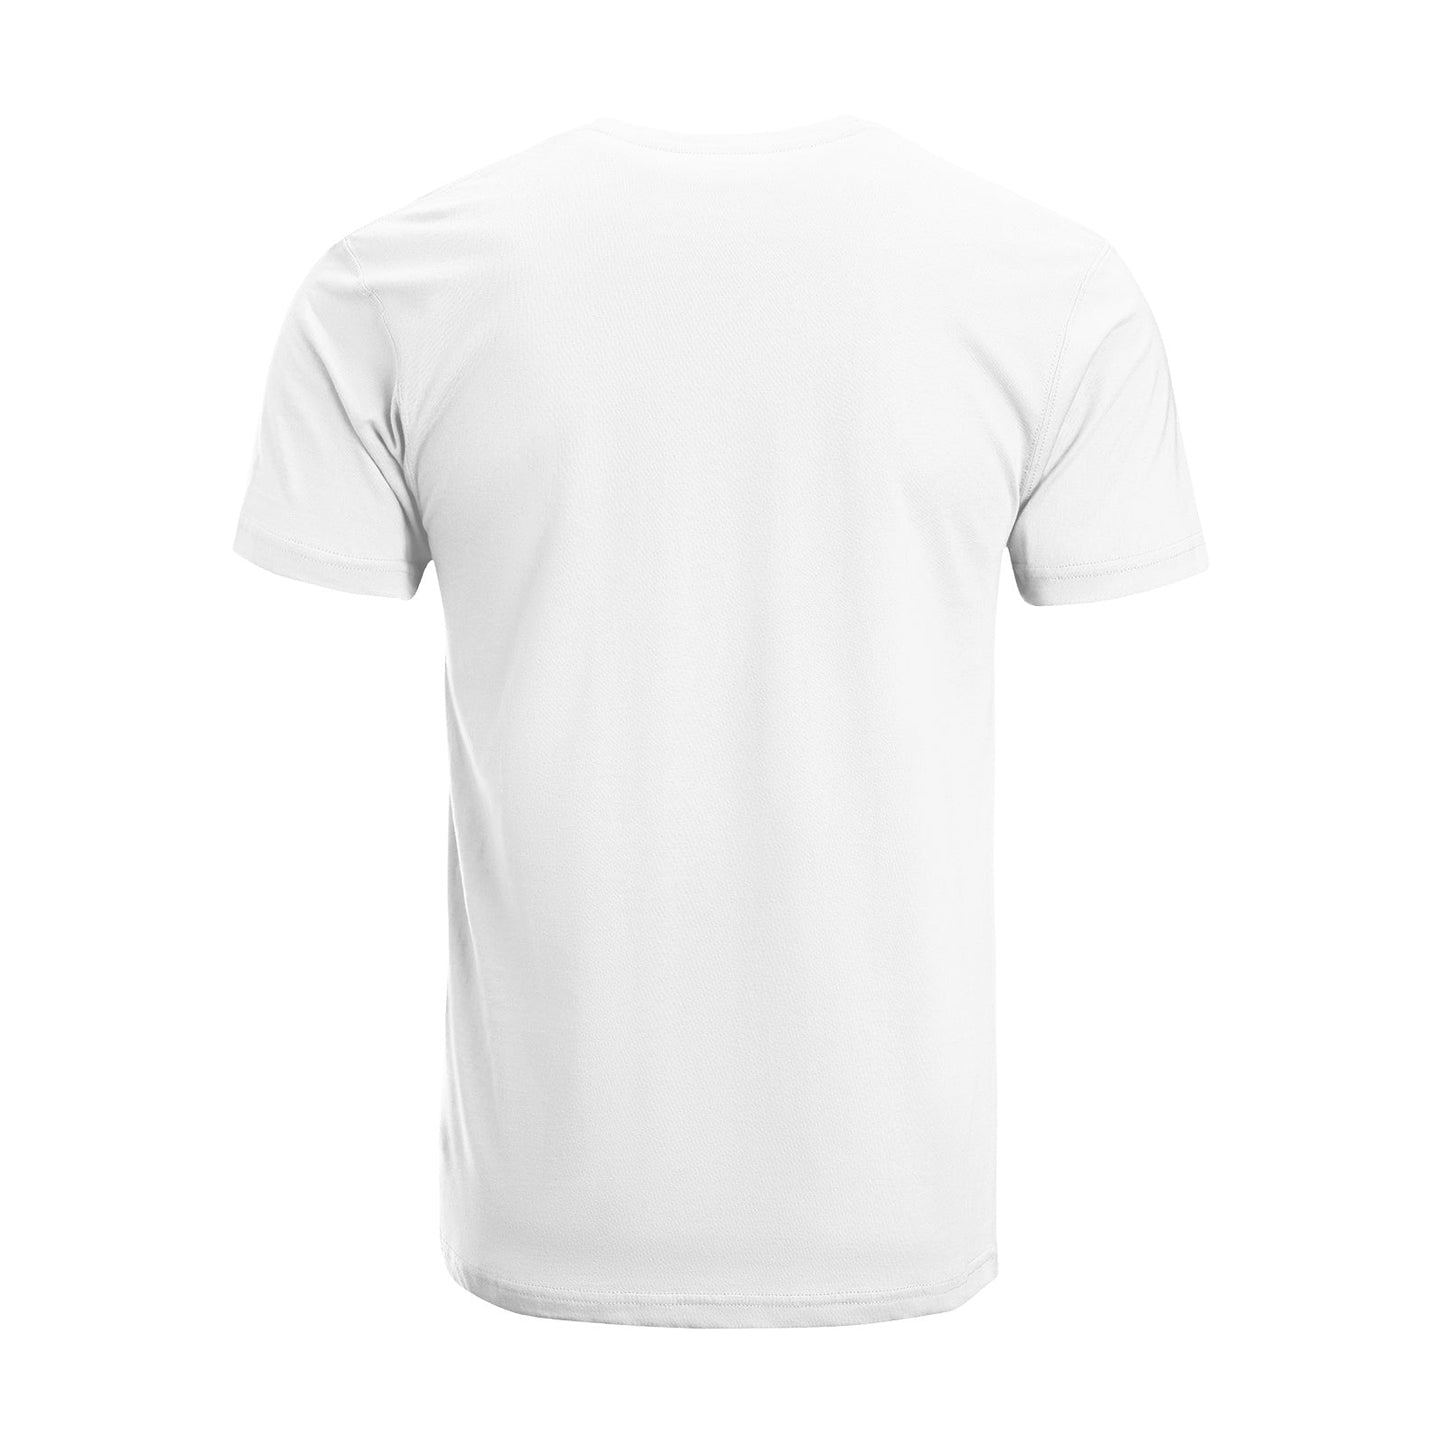 Unisex Short Sleeve Crew Neck Cotton Jersey T-Shirt MOM 13